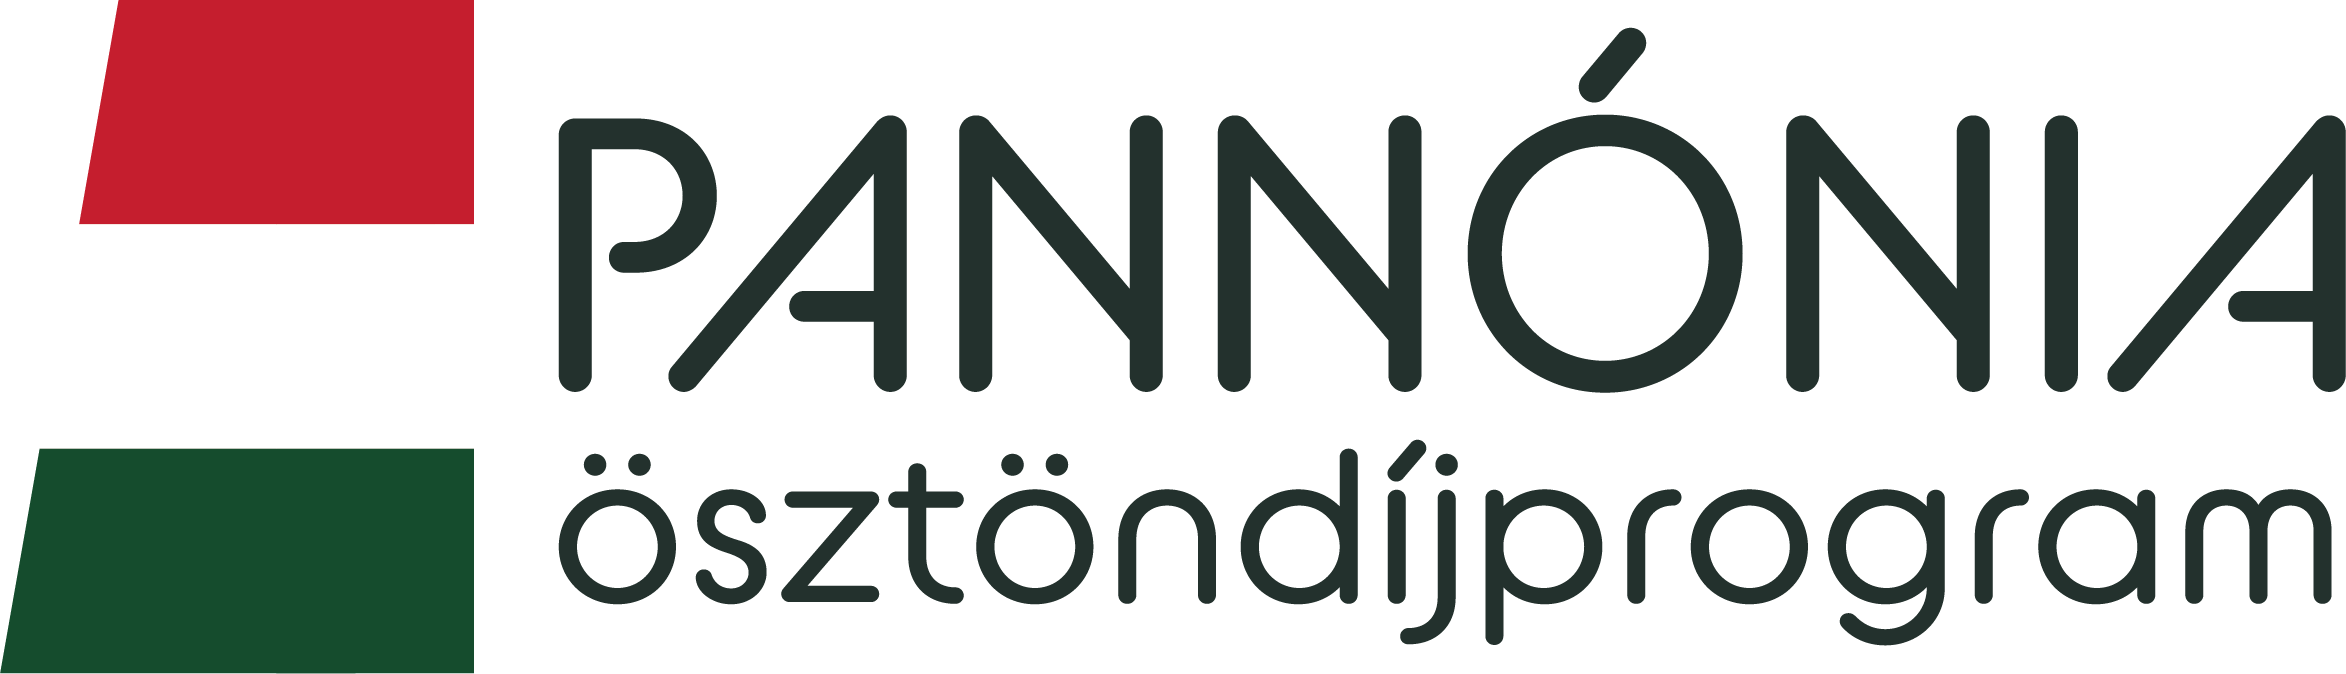 pannonia_osztondijprogram_logo